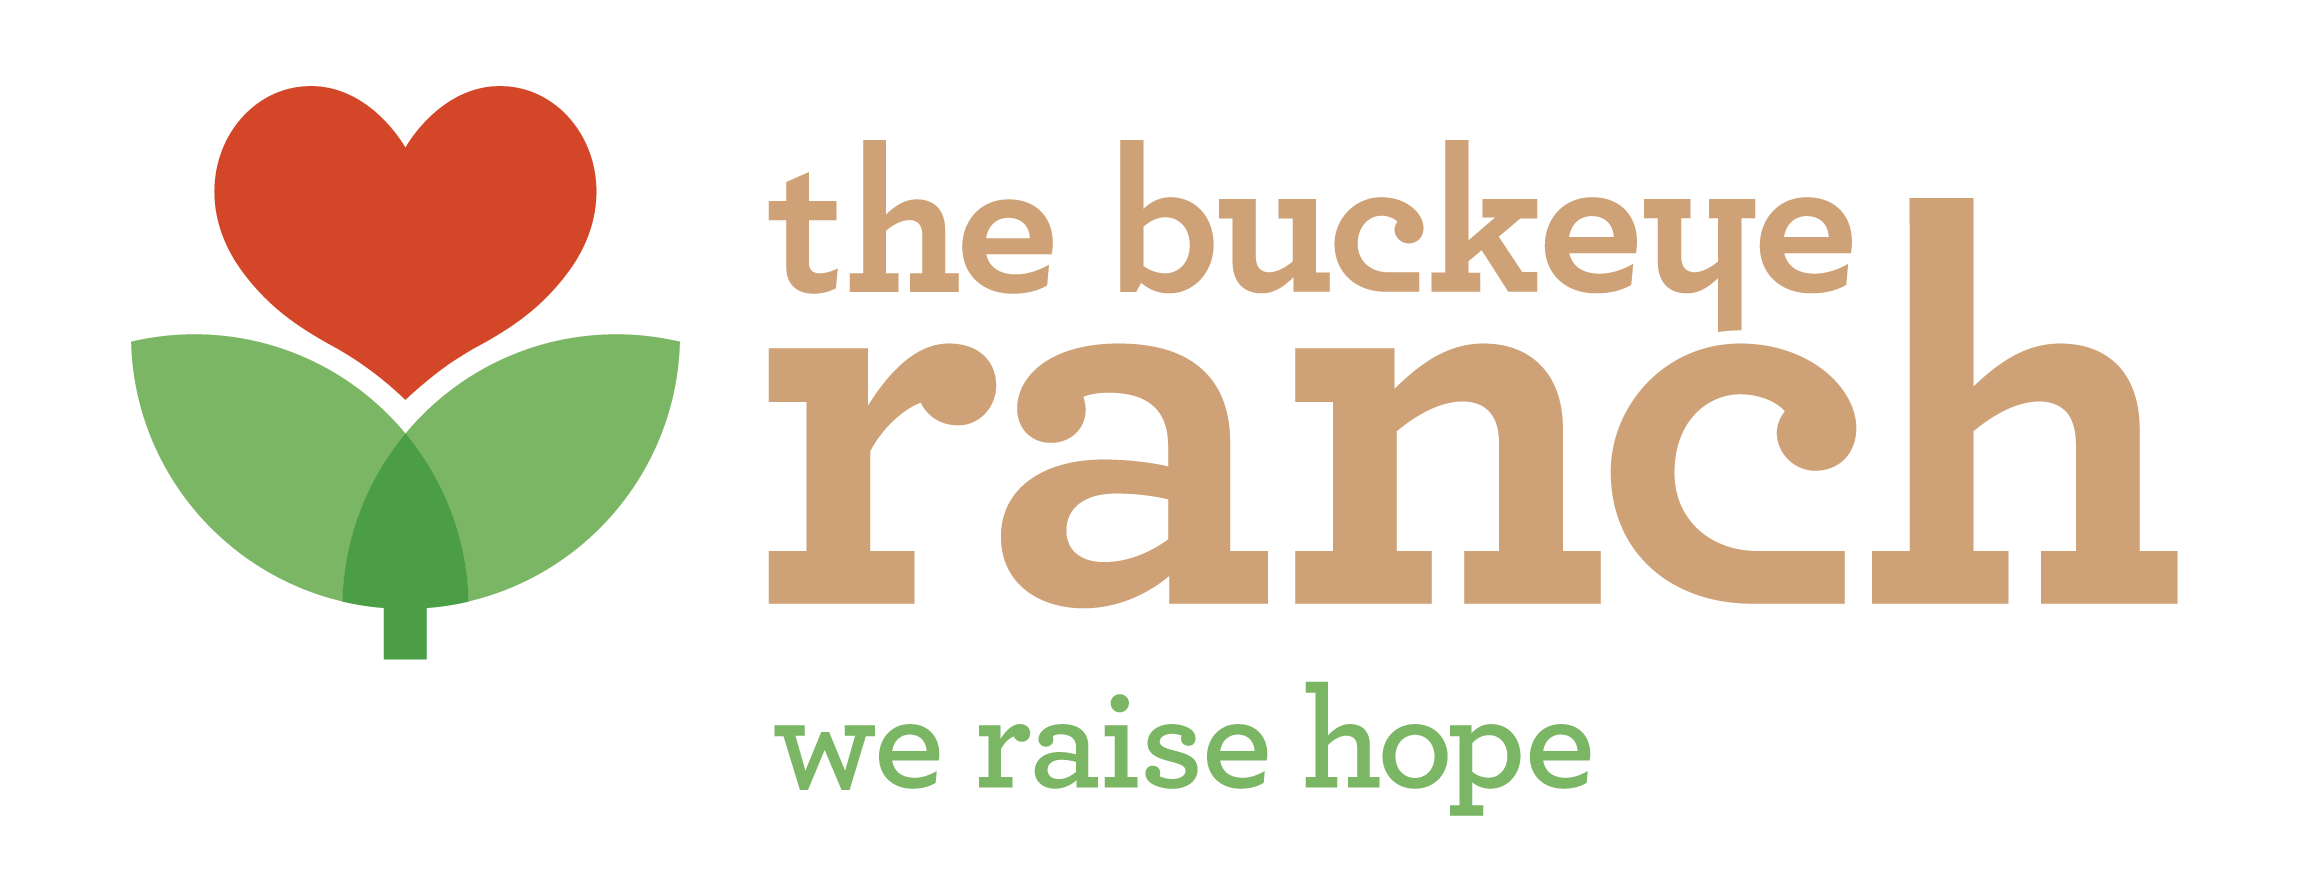 The Buckeye Ranch logo